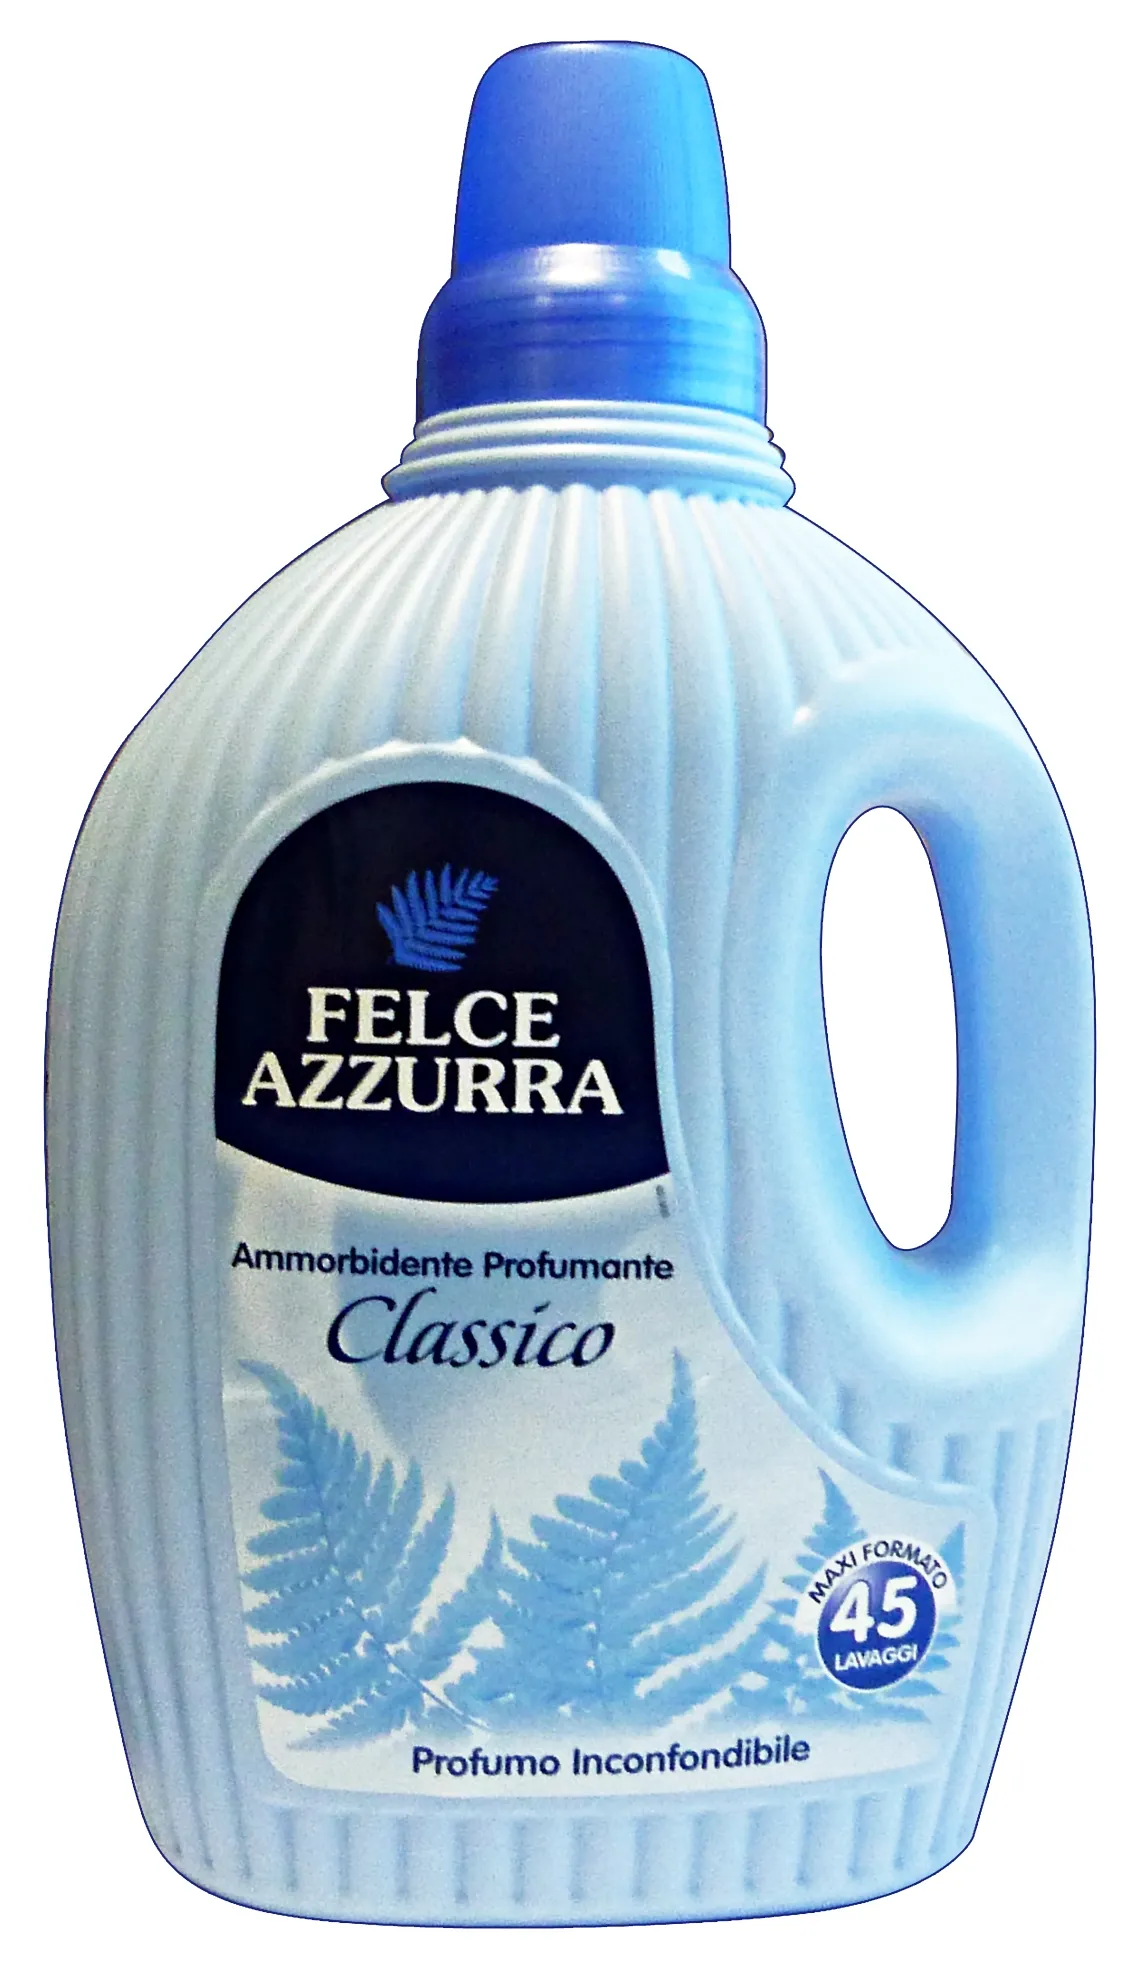 "FELCE AZZURRA Ammorbidente 3 Lt. Profumante Classico Detergenti Casa"